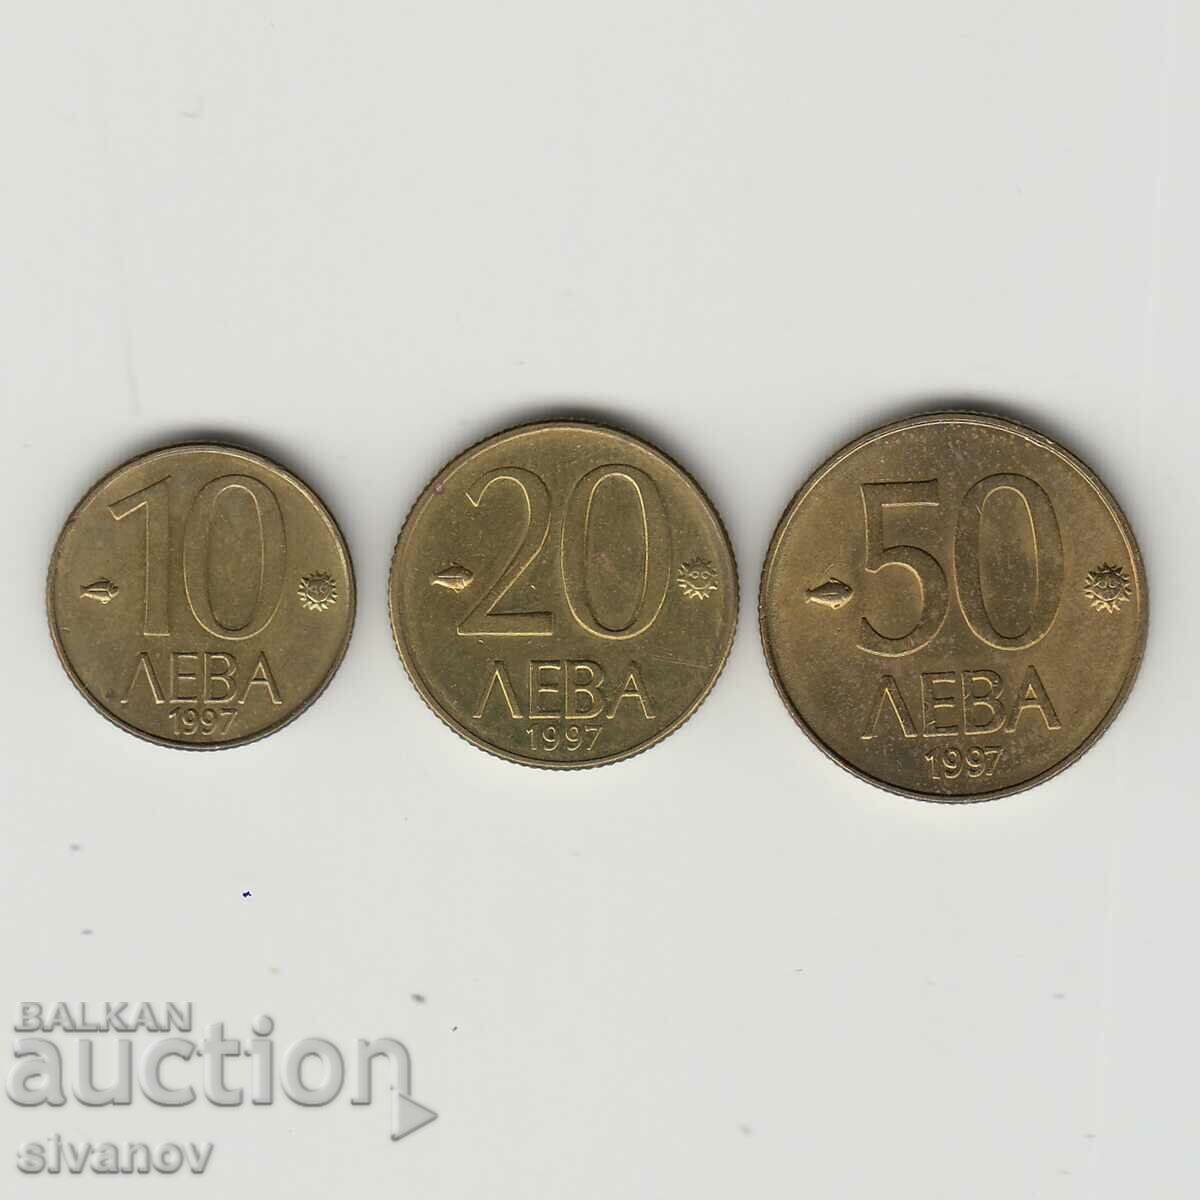 Bulgaria 10, 20, 50 leva 1997 set lot #5410